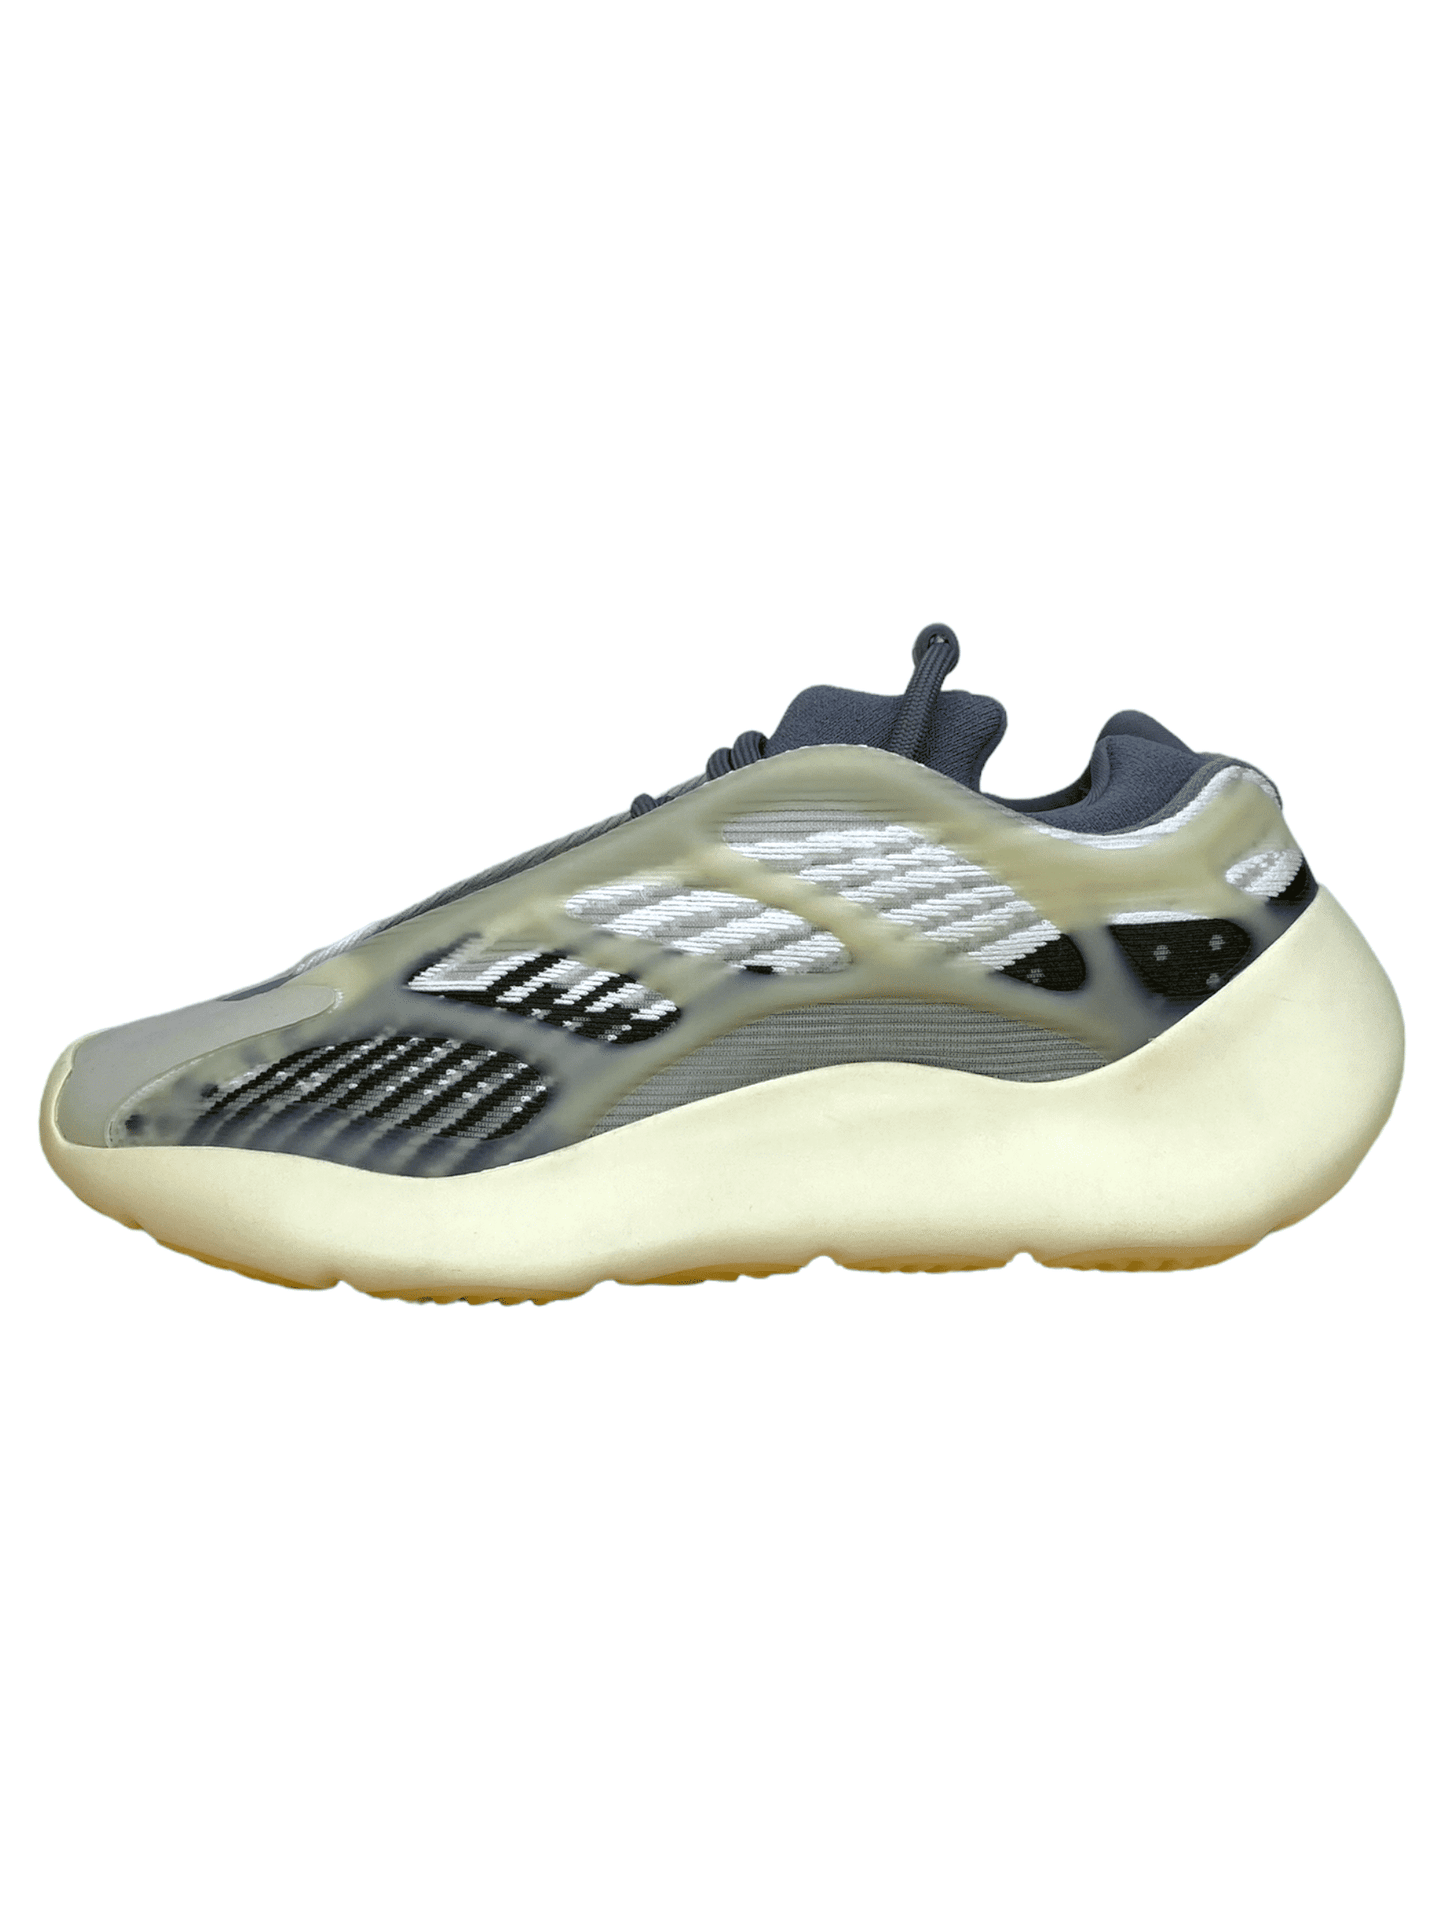 Adidas Yeezy 700 V3 Fade Salt Sneakers